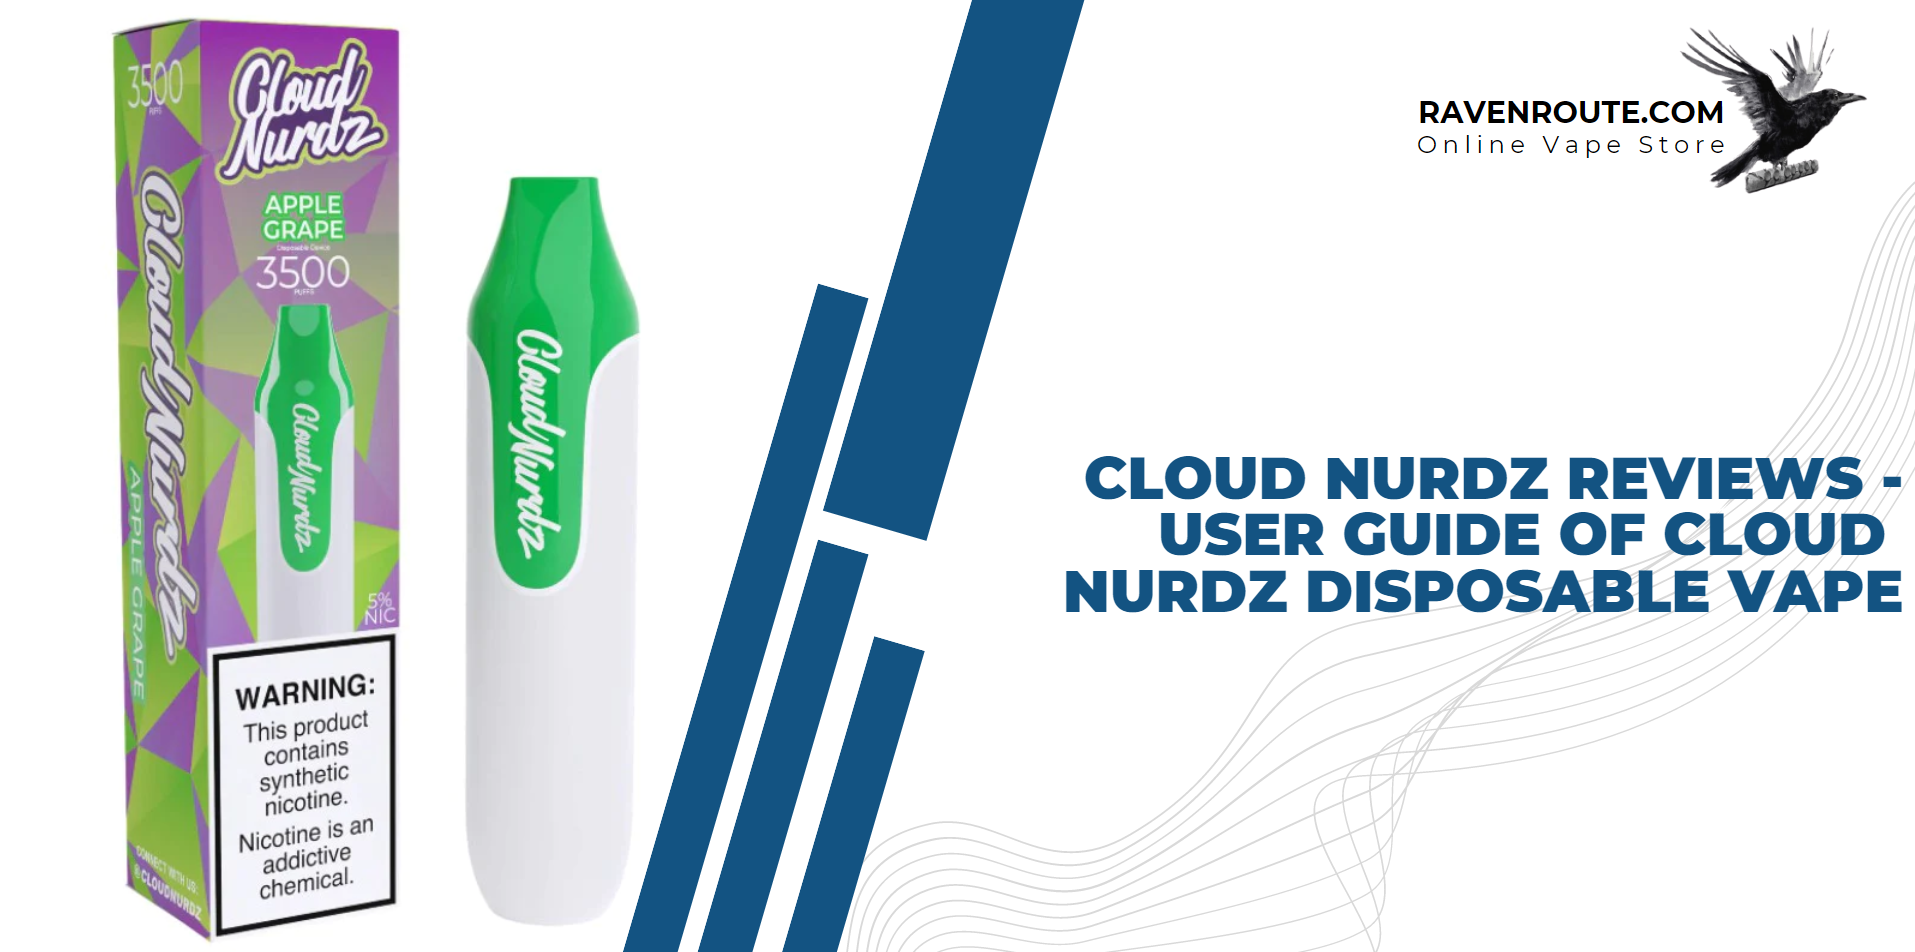 Cloud Nurdz Reviews - User Guide of Cloud Nurdz Disposable Vape